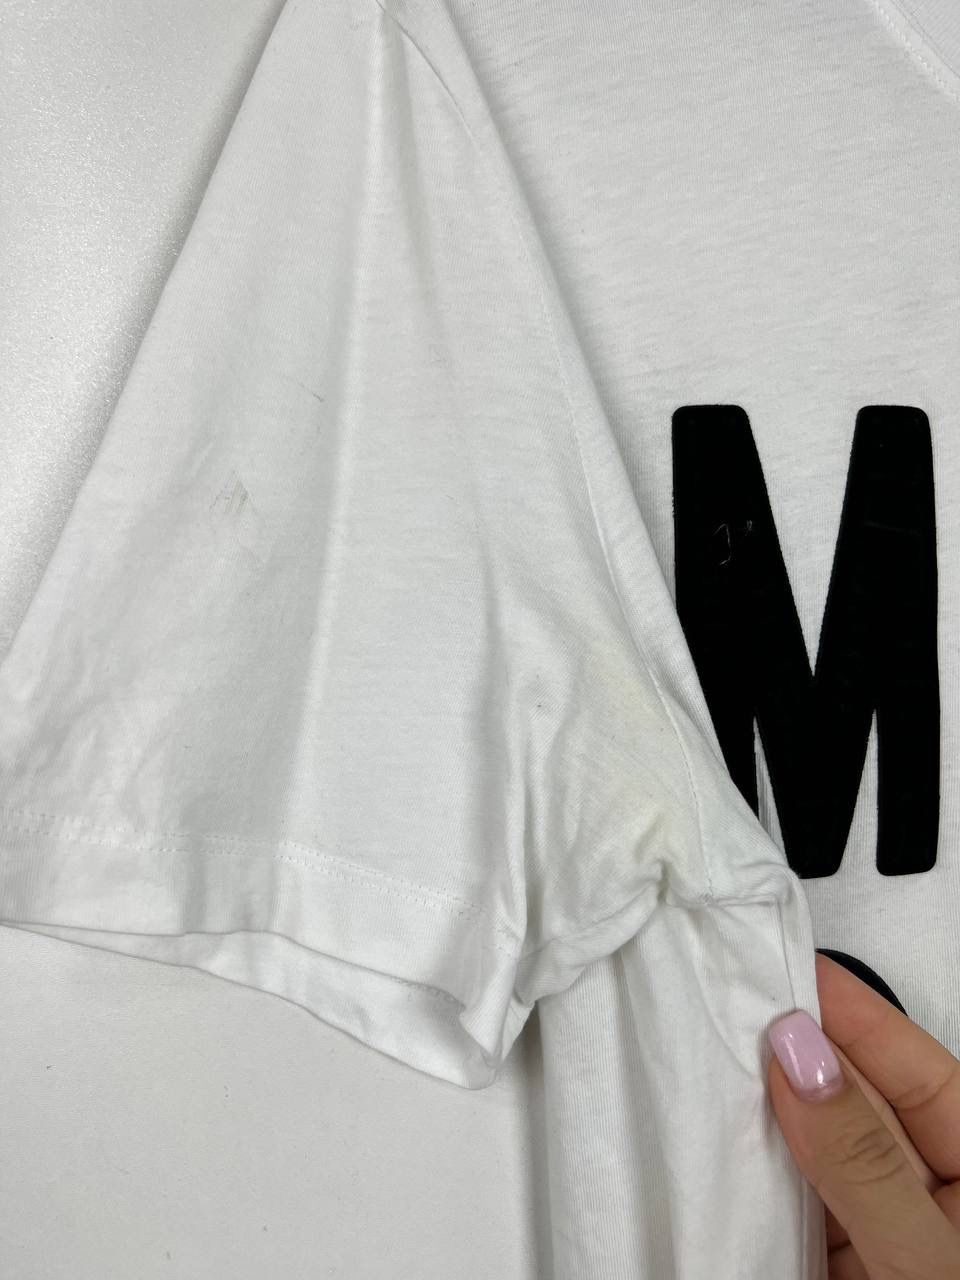 Alexander McQueen McQueen luxury t-shirts size M Size US M / EU 48-50 / 2 - 2 Preview